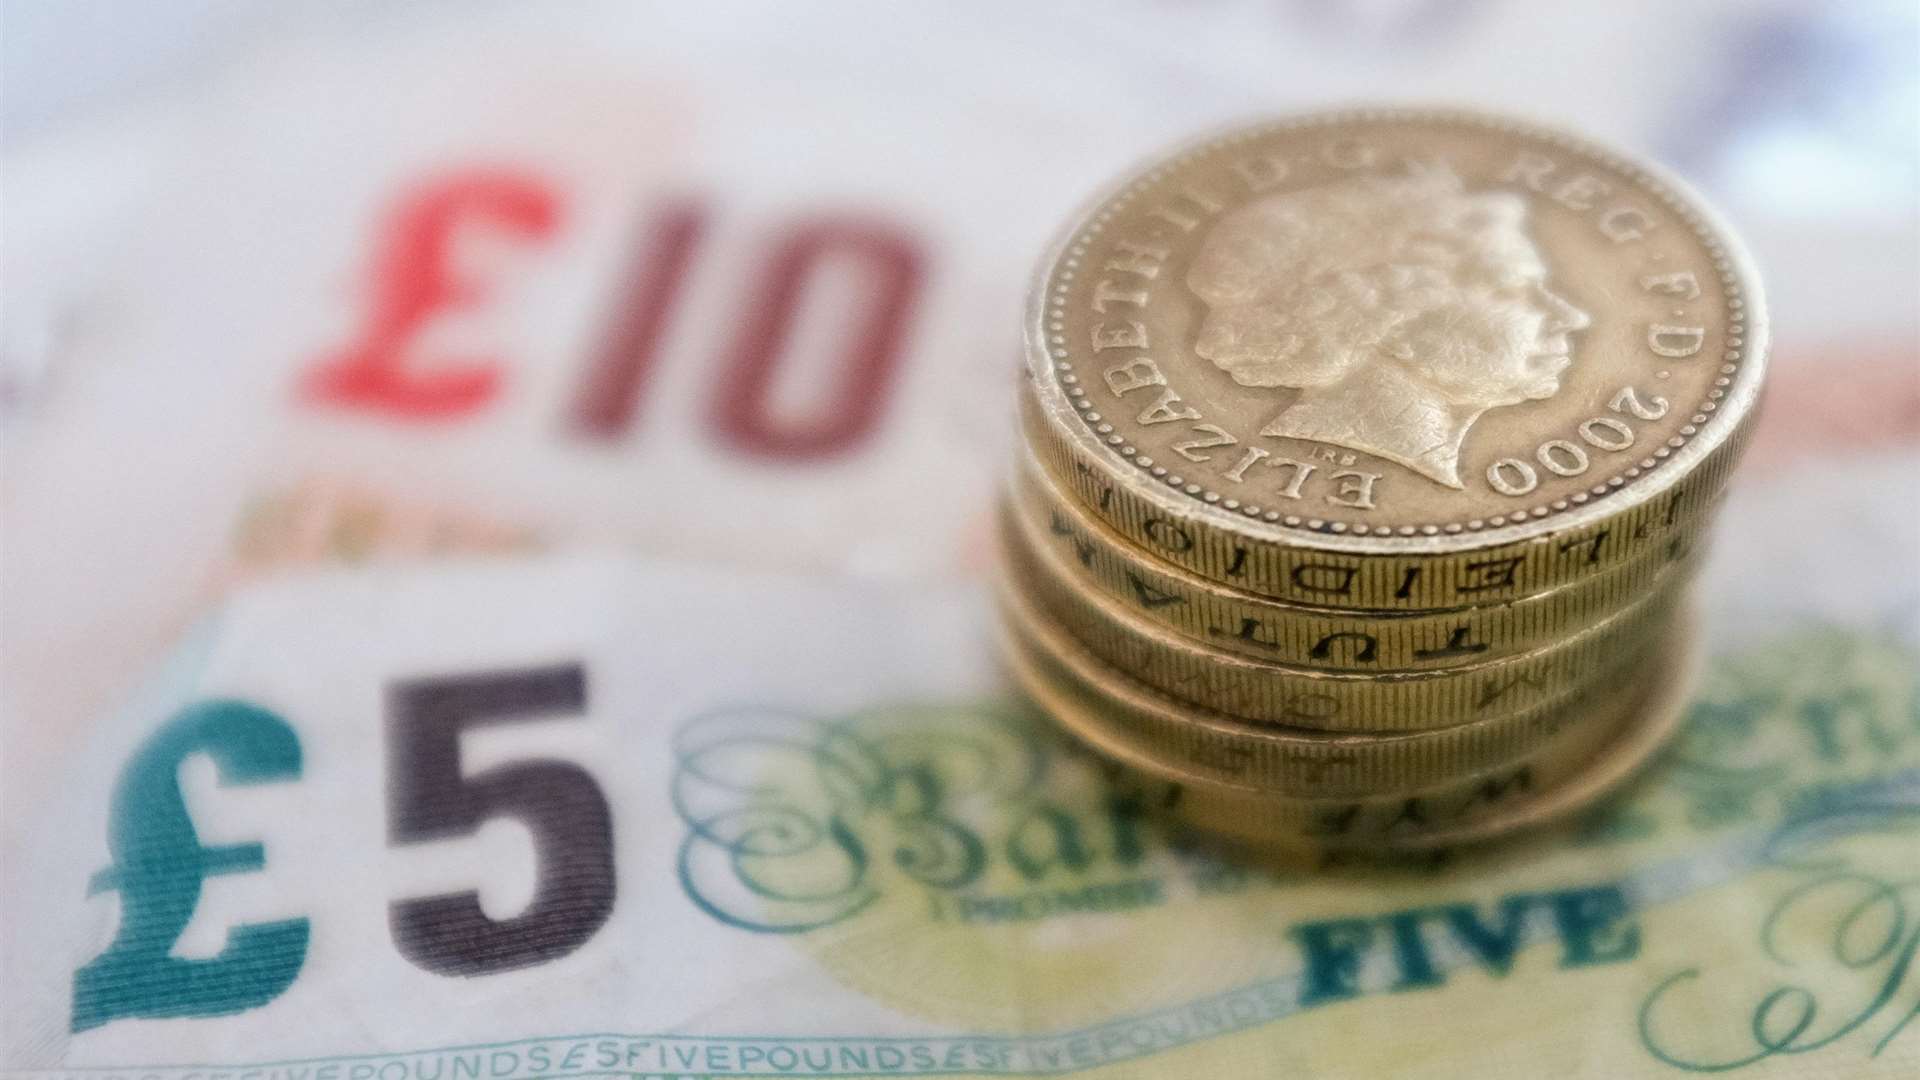 Kent children get an average of £6.40 in pocket money. Stock image